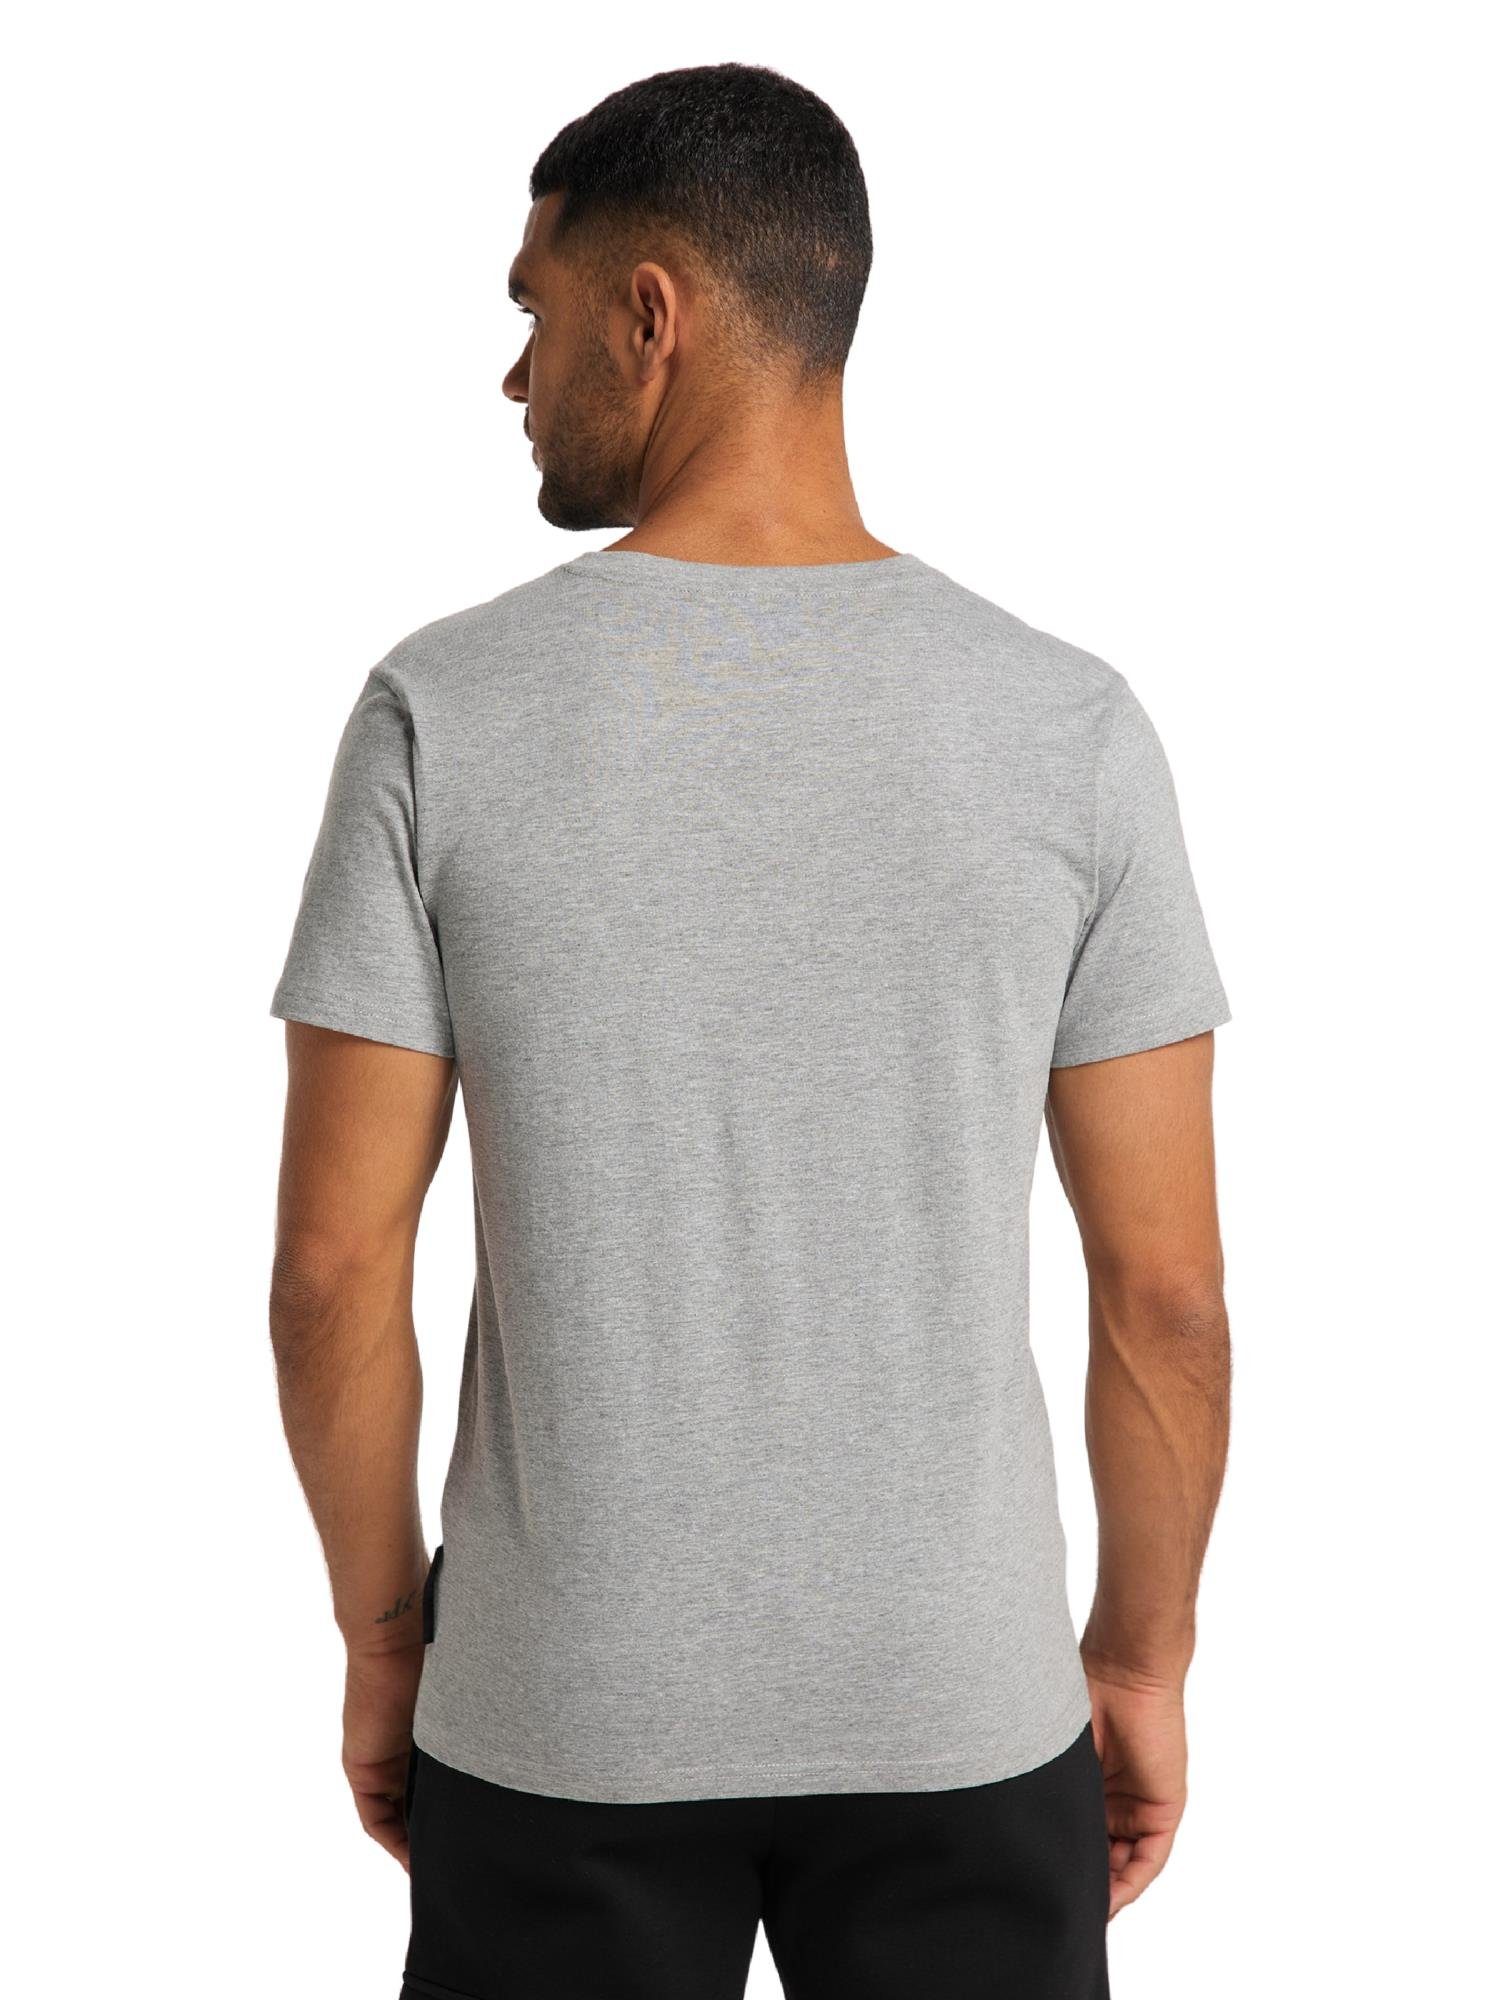 Banani / Melange PHILLIPS Bruno T-Shirt Grau